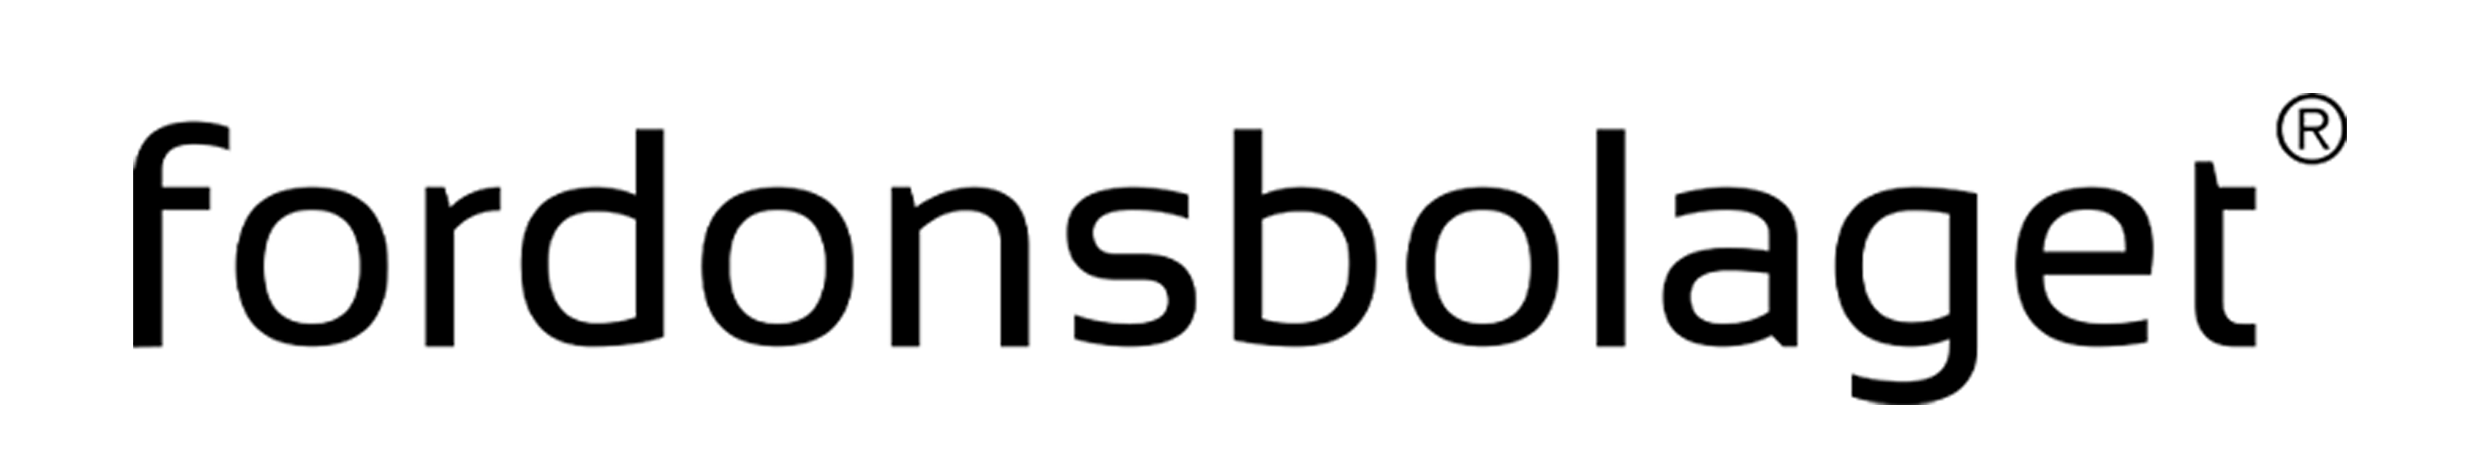 Fordonsbolaget logo